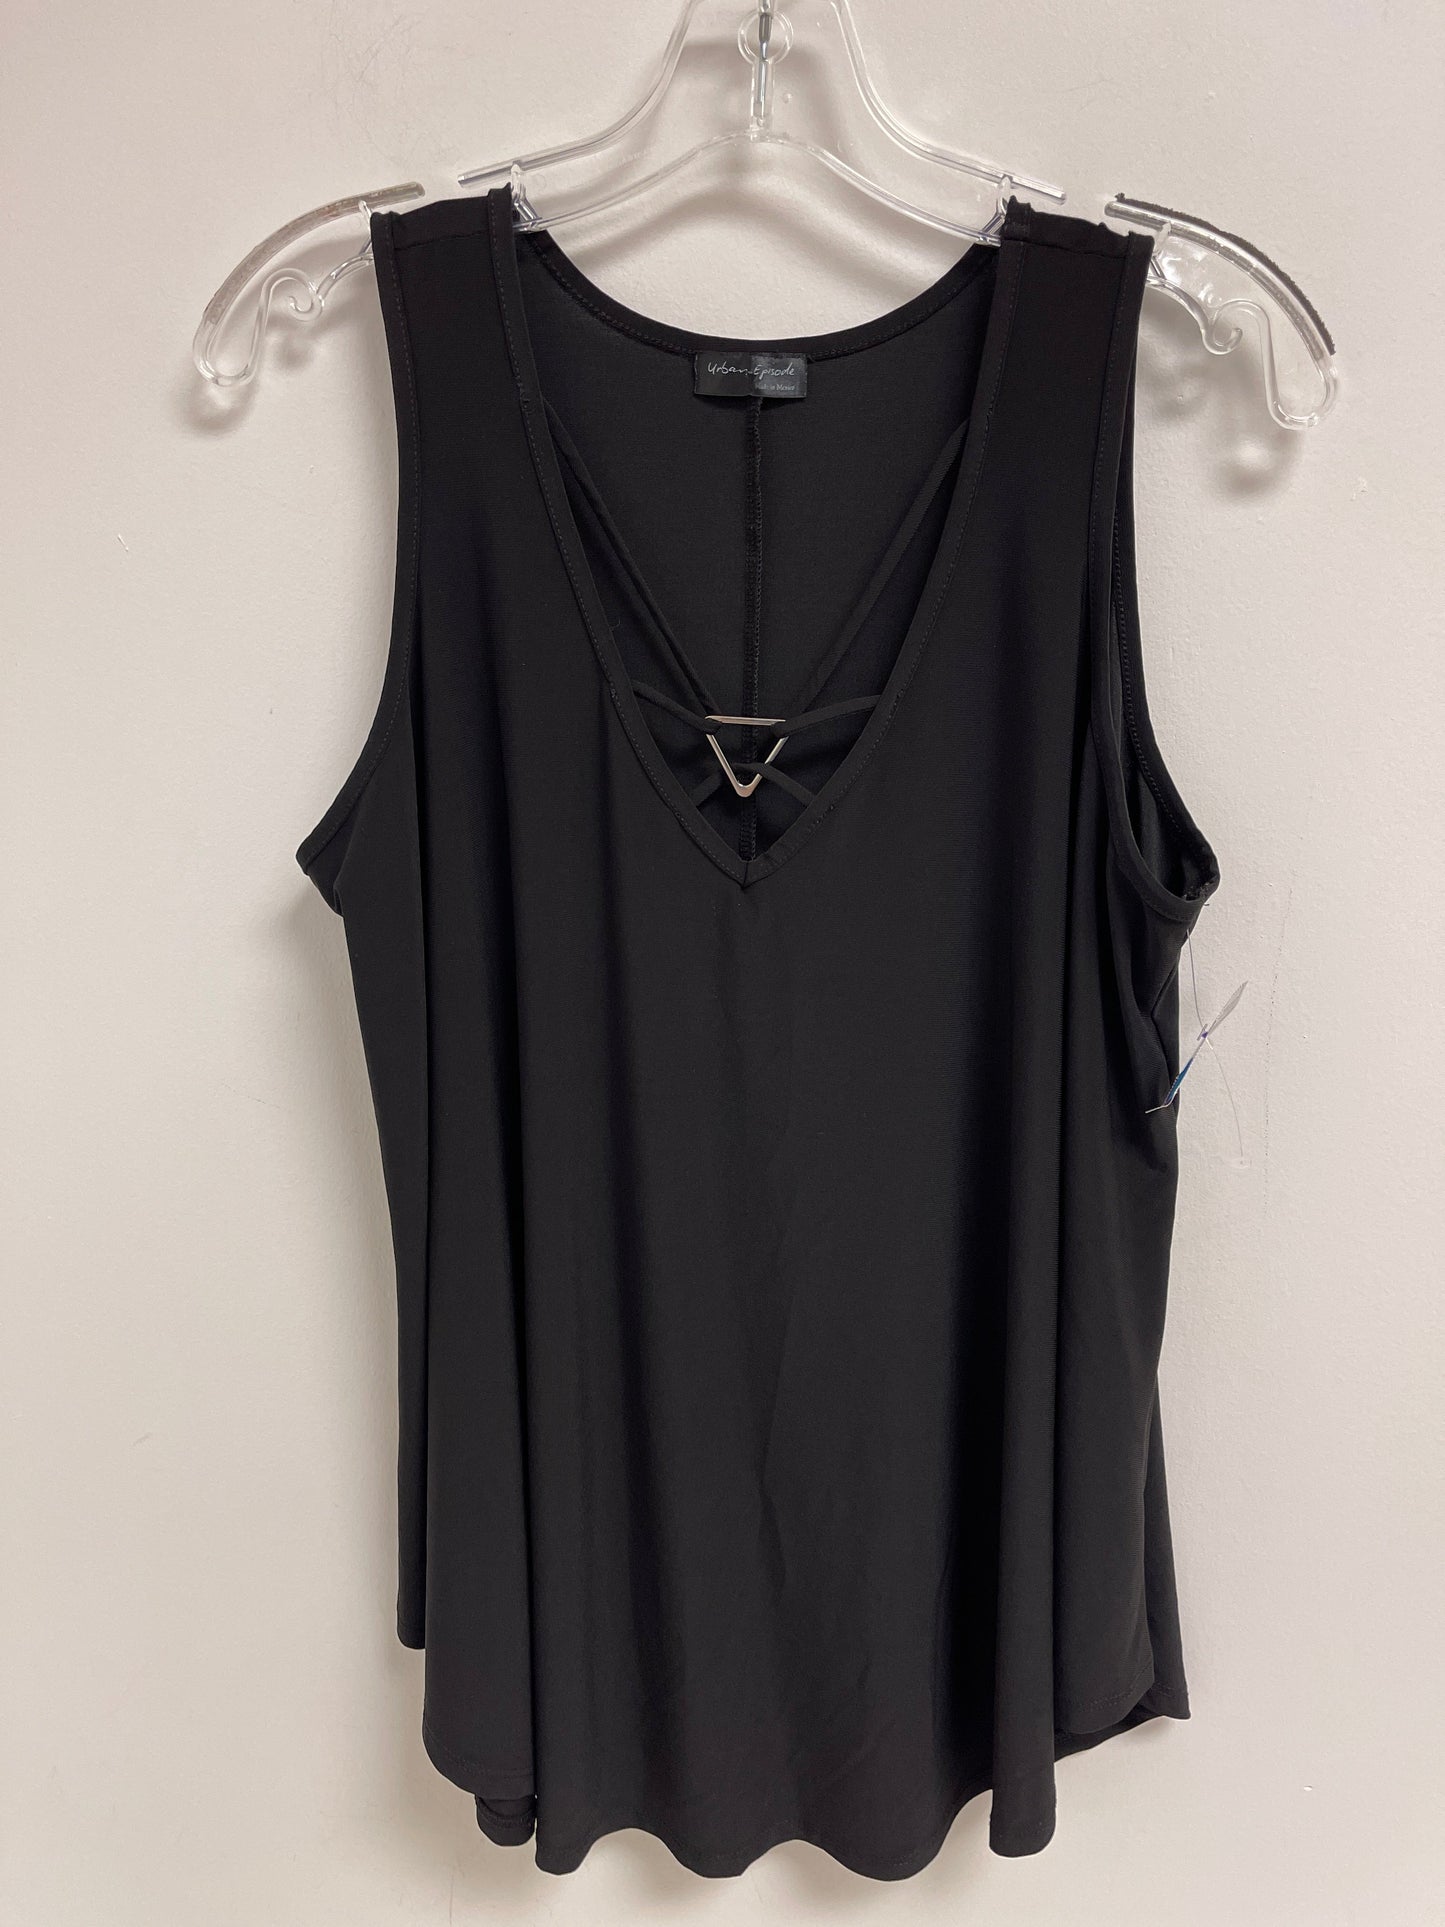 Black Top Sleeveless Clothes Mentor, Size 2x